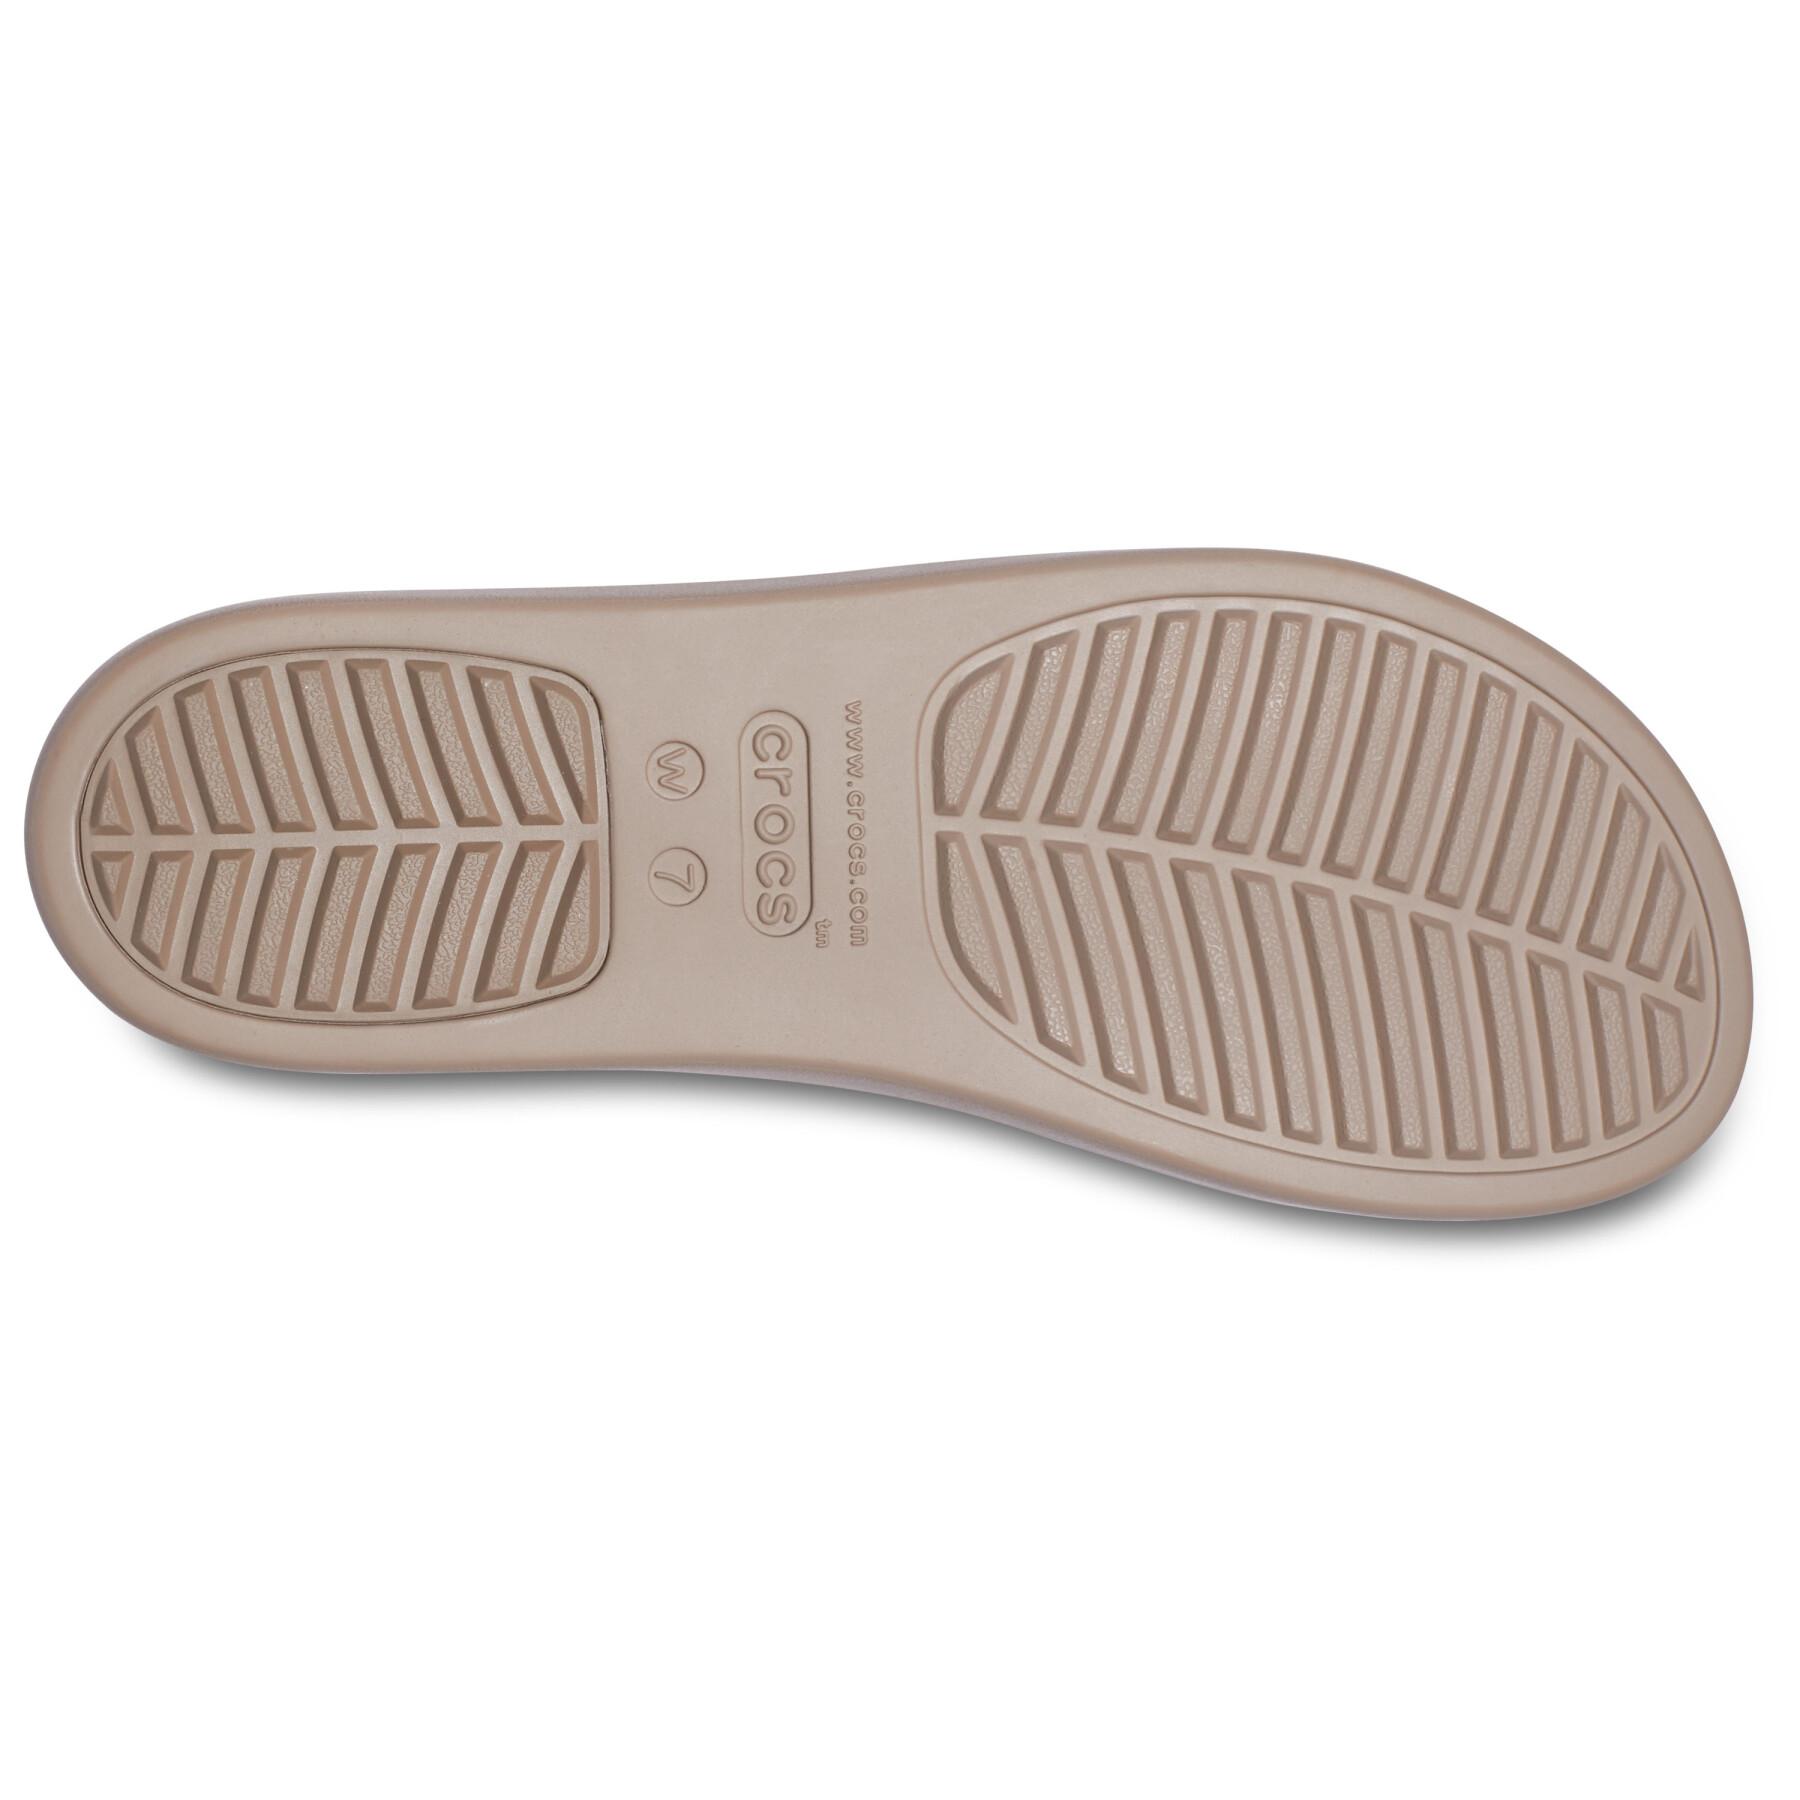 Women's sandals Crocs brooklyn low wedge